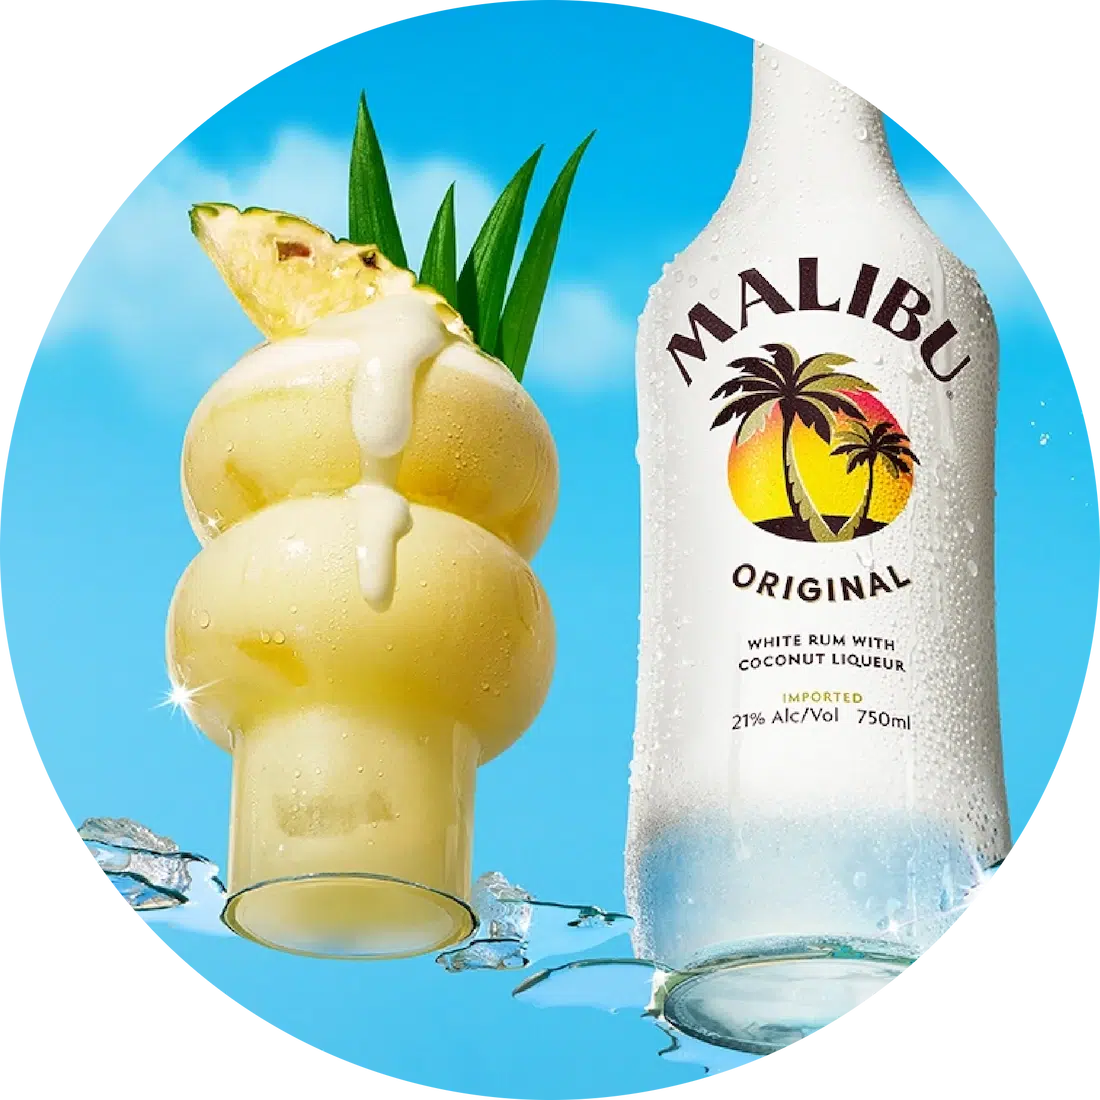 Malibu original with piña colada